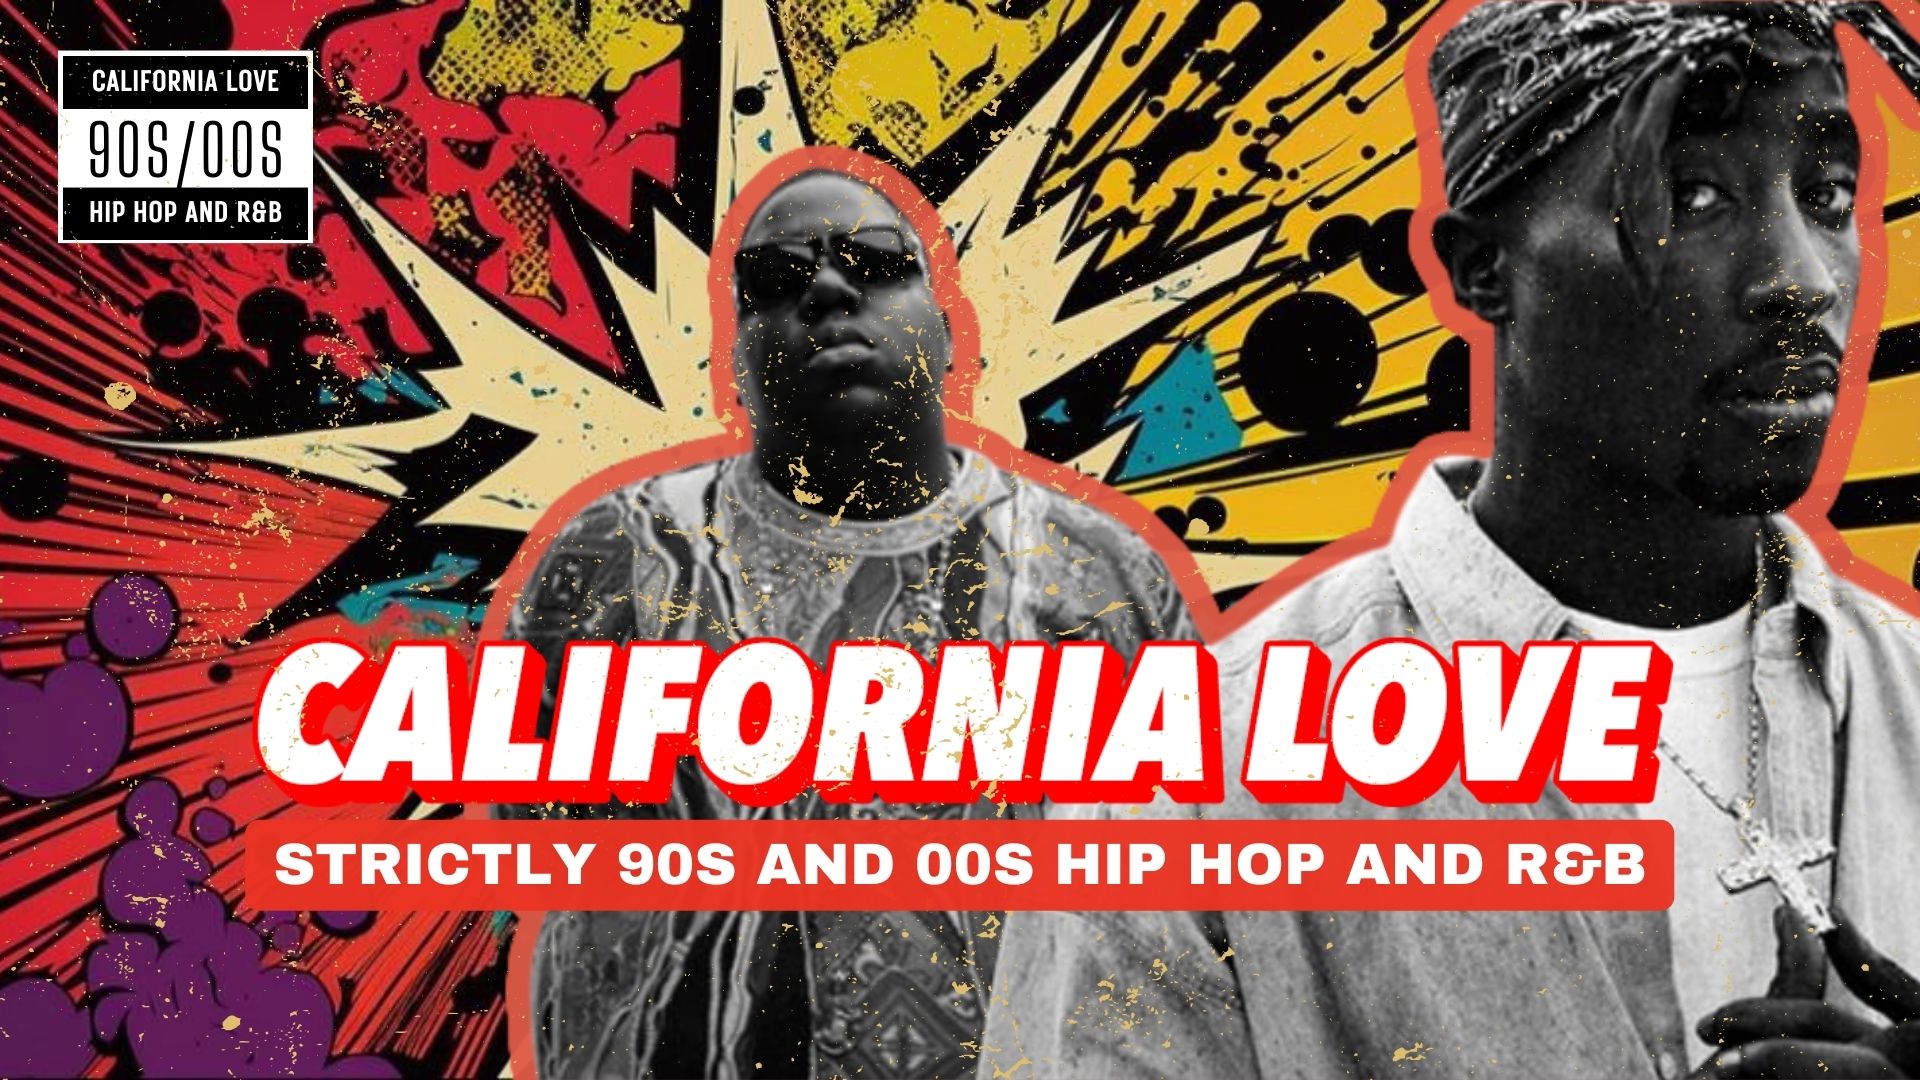 California Love (90s/00s Hip Hop and R&B) Edinburgh at La Belle